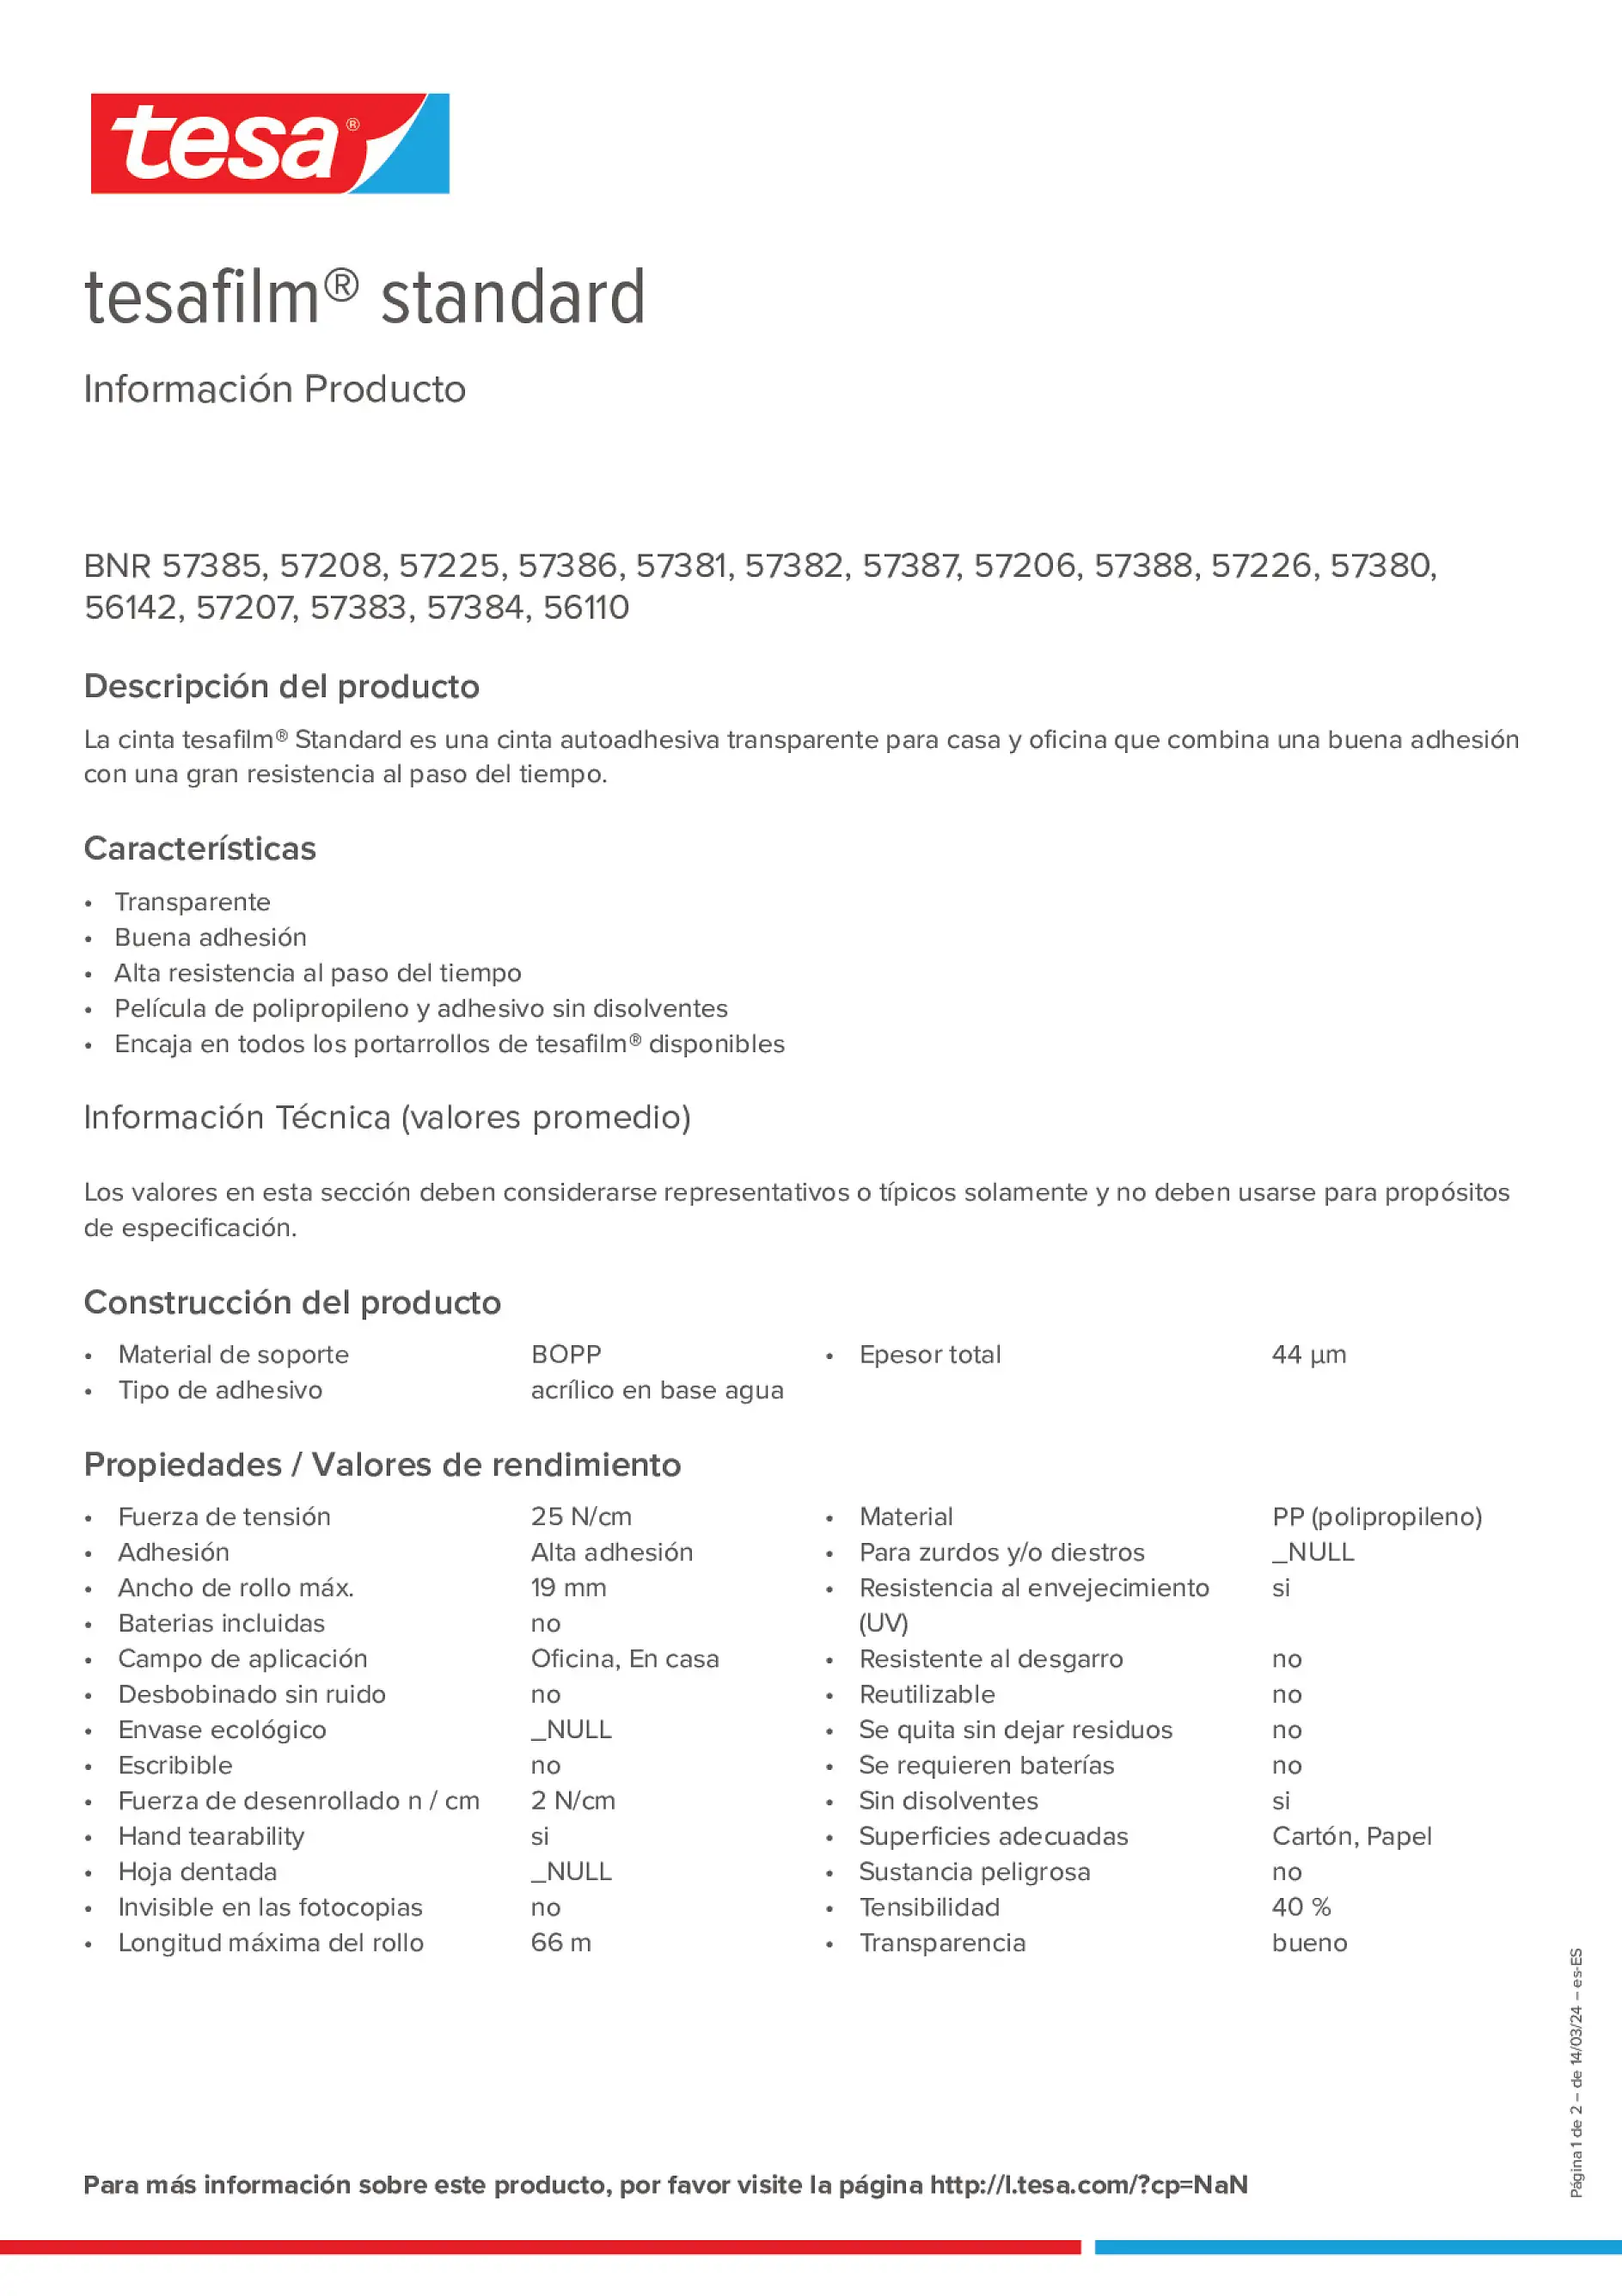 Product information_tesafilm® 57226_es-ES